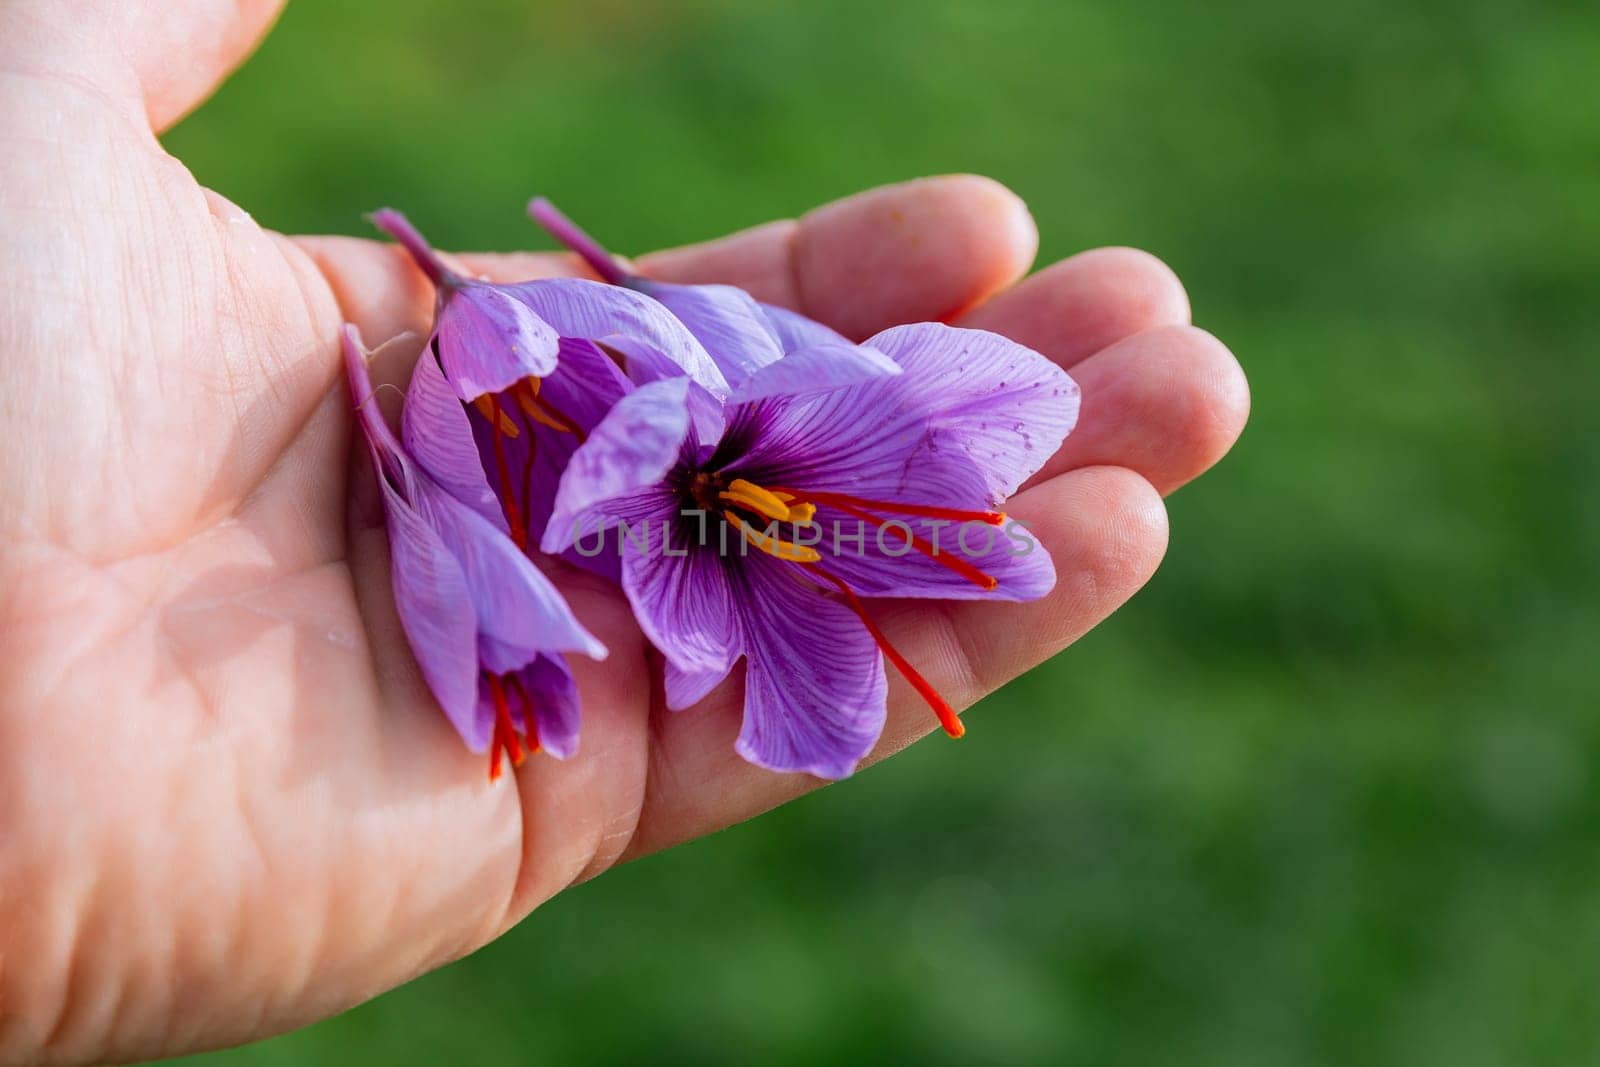 The autumn flowering period of crocus sativus. Harvesting saffron. Cultivation of saffron for the production of a valuable spice.